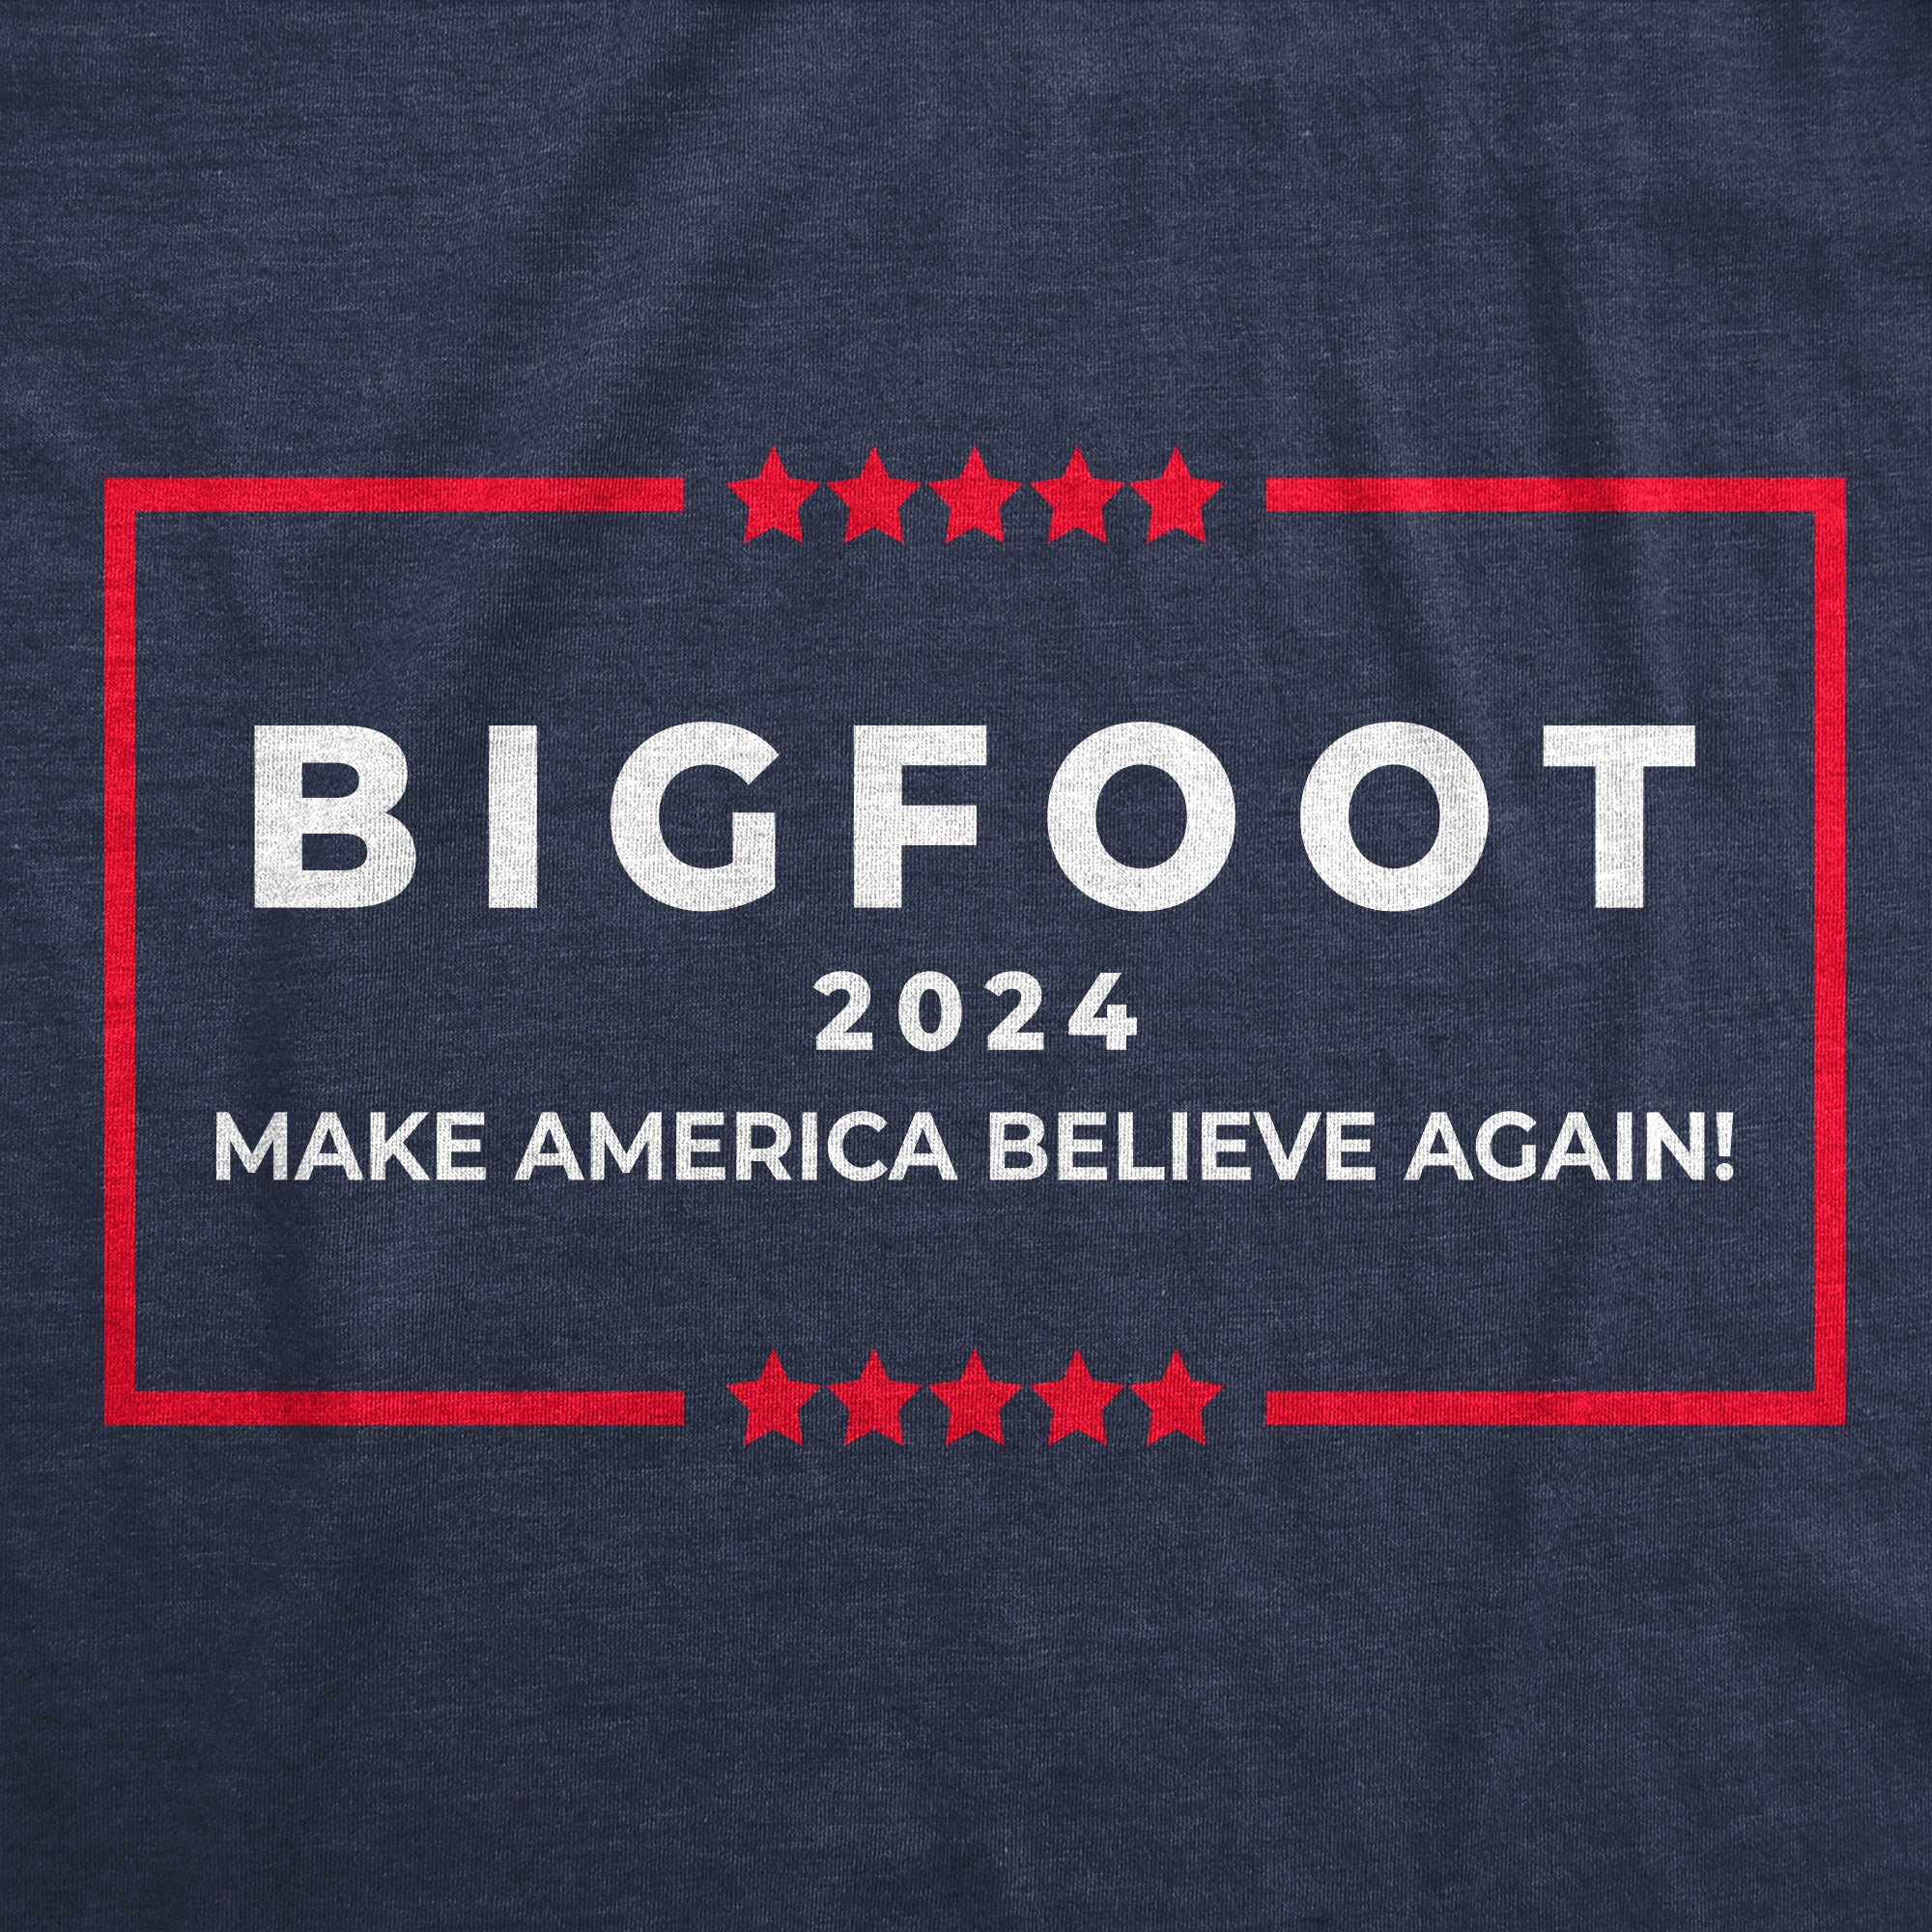 Funny Heather Navy - Bigfoot 2024 Bigfoot 2024 Mens T Shirt Nerdy sarcastic Political Tee